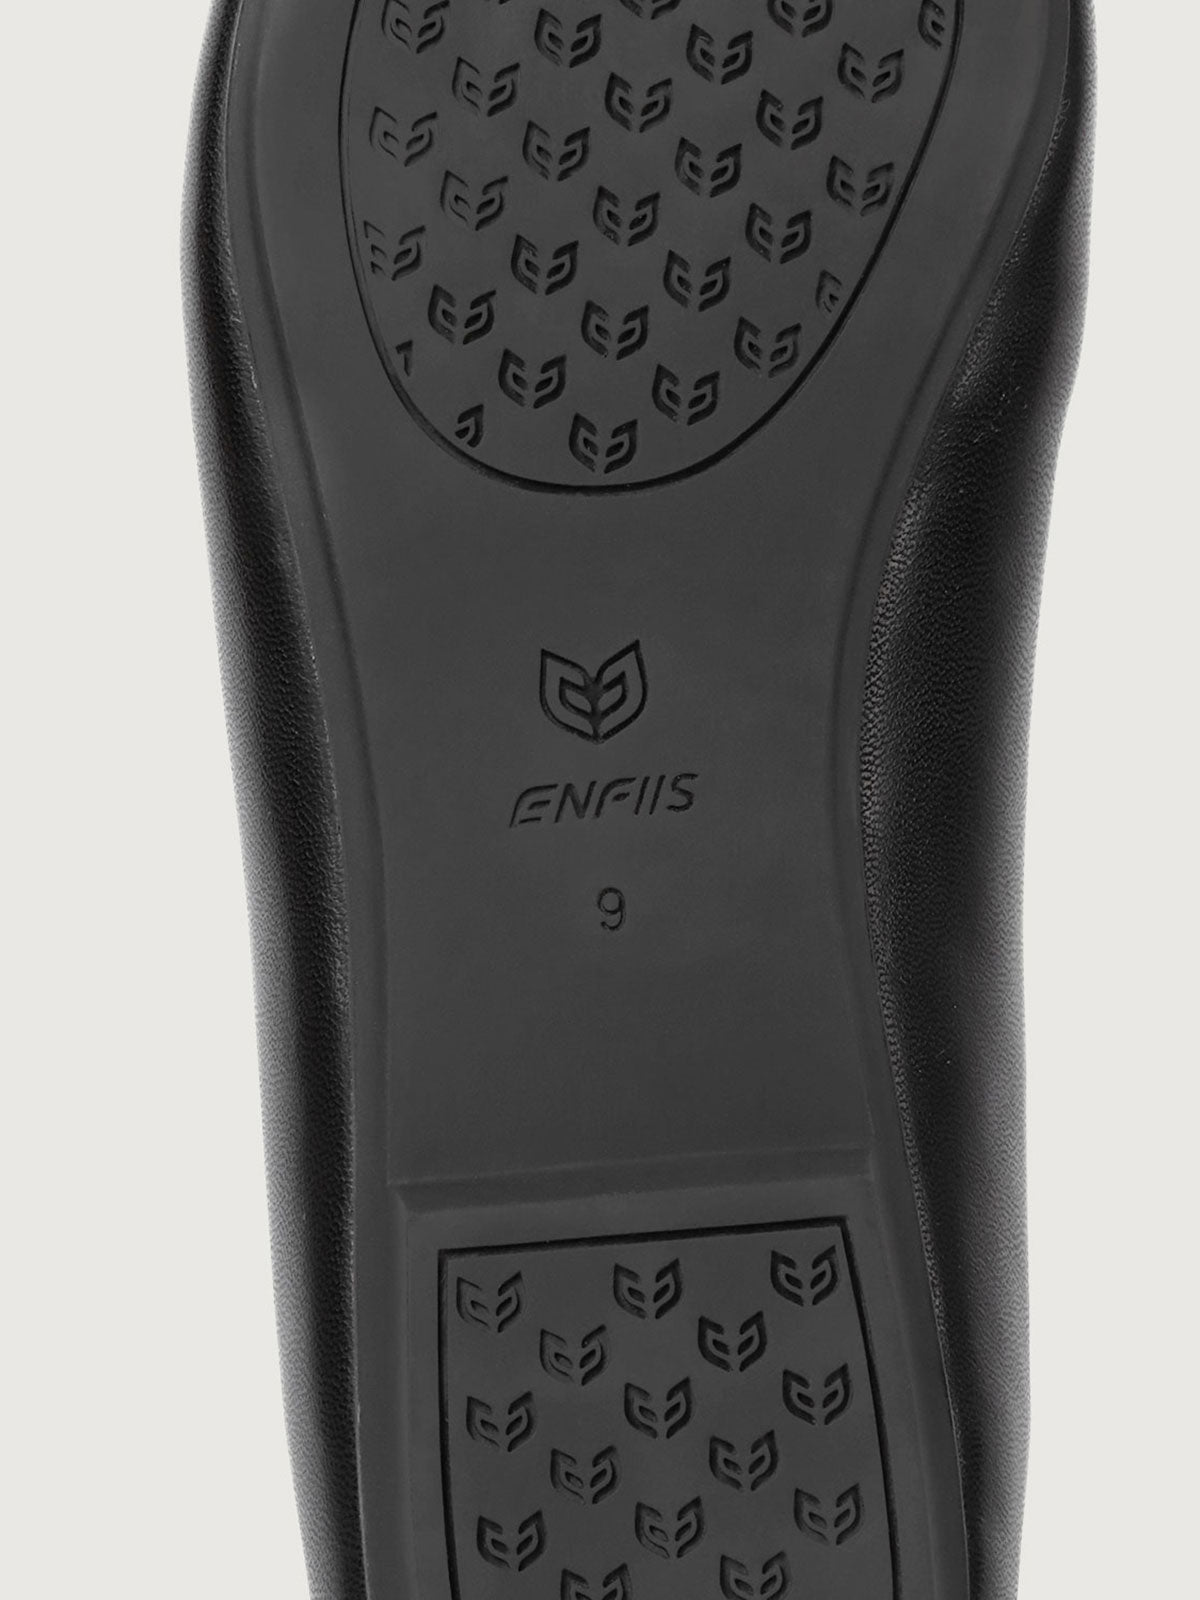 Black lamb-pattern microfiber convertible loafer shoes. Flats - ENFIIS